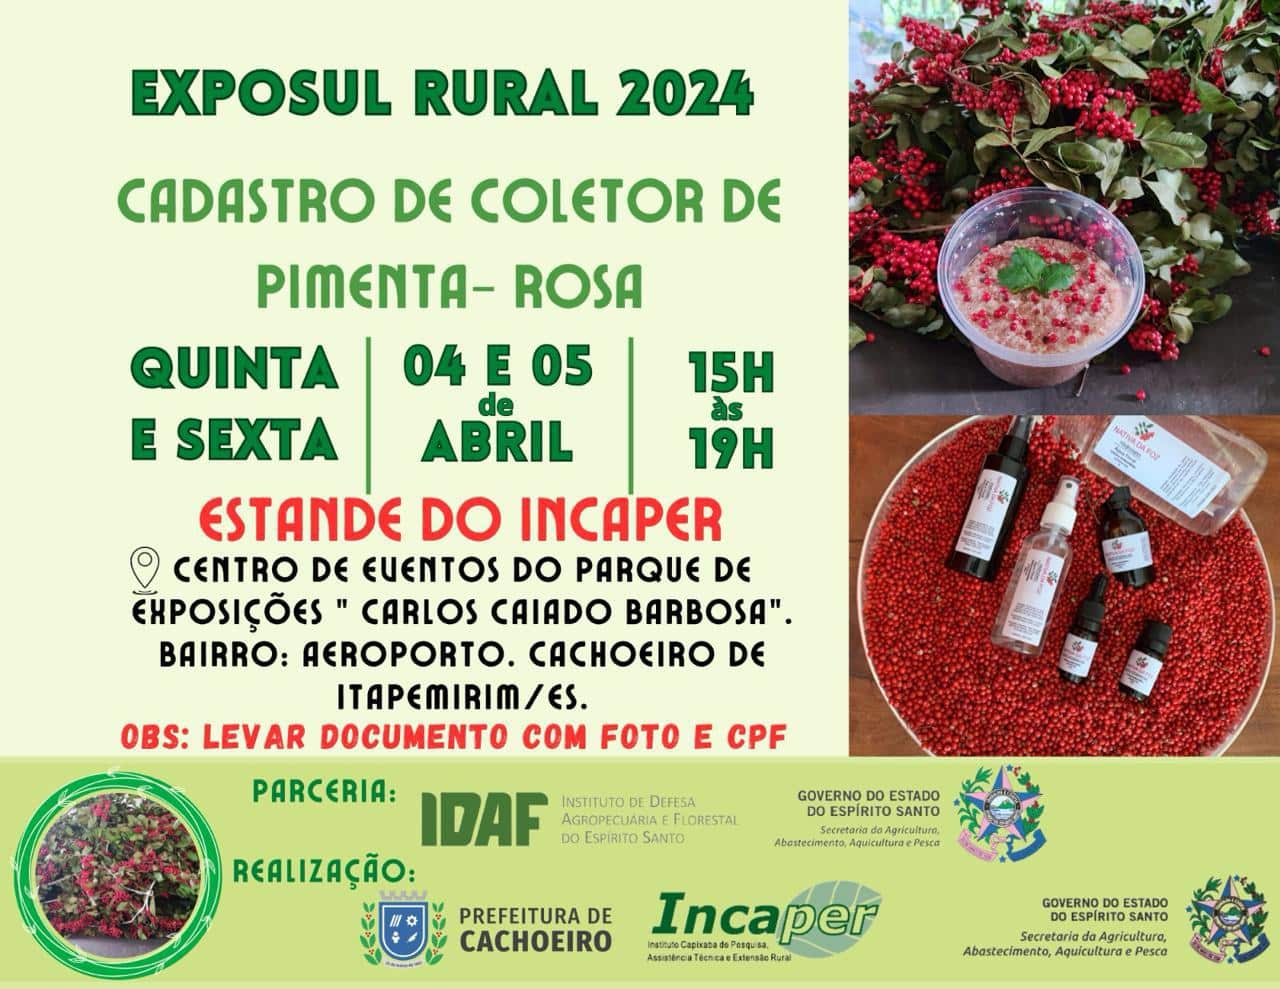 Incaper realizará cadastro de coletor de pimenta-rosa na ExpoSul Rural